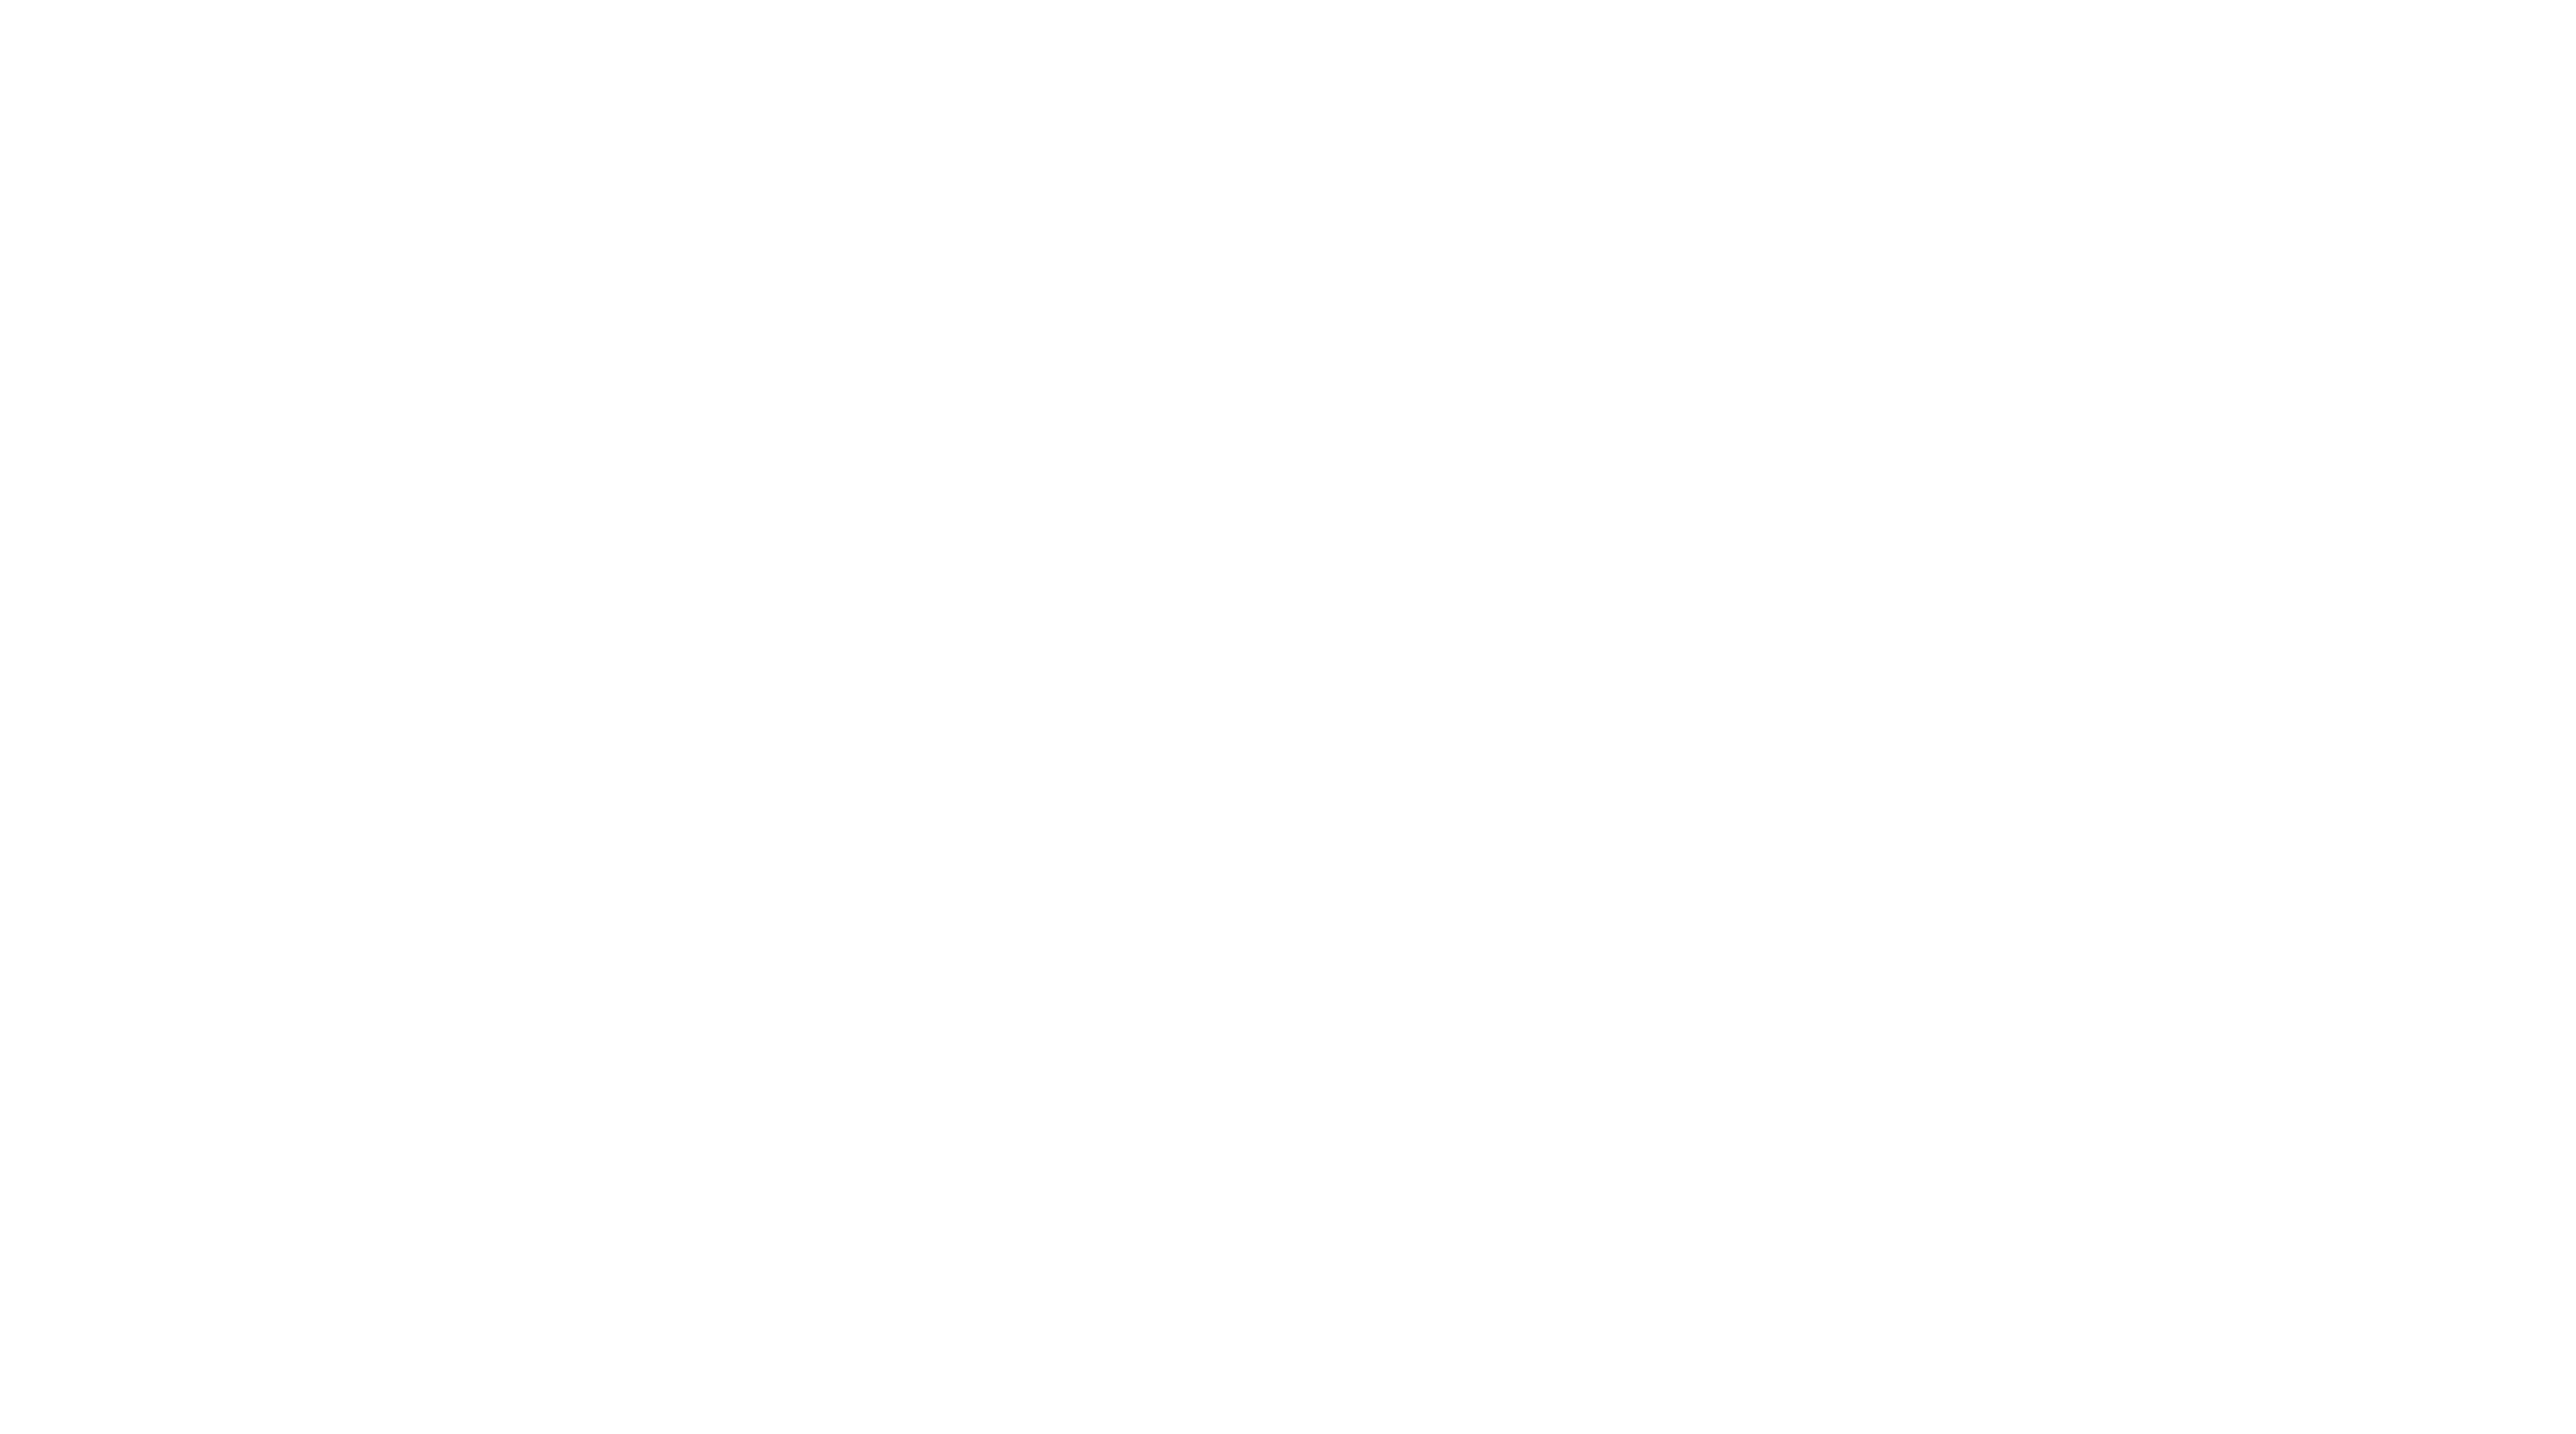 Leroy Seafood Logo